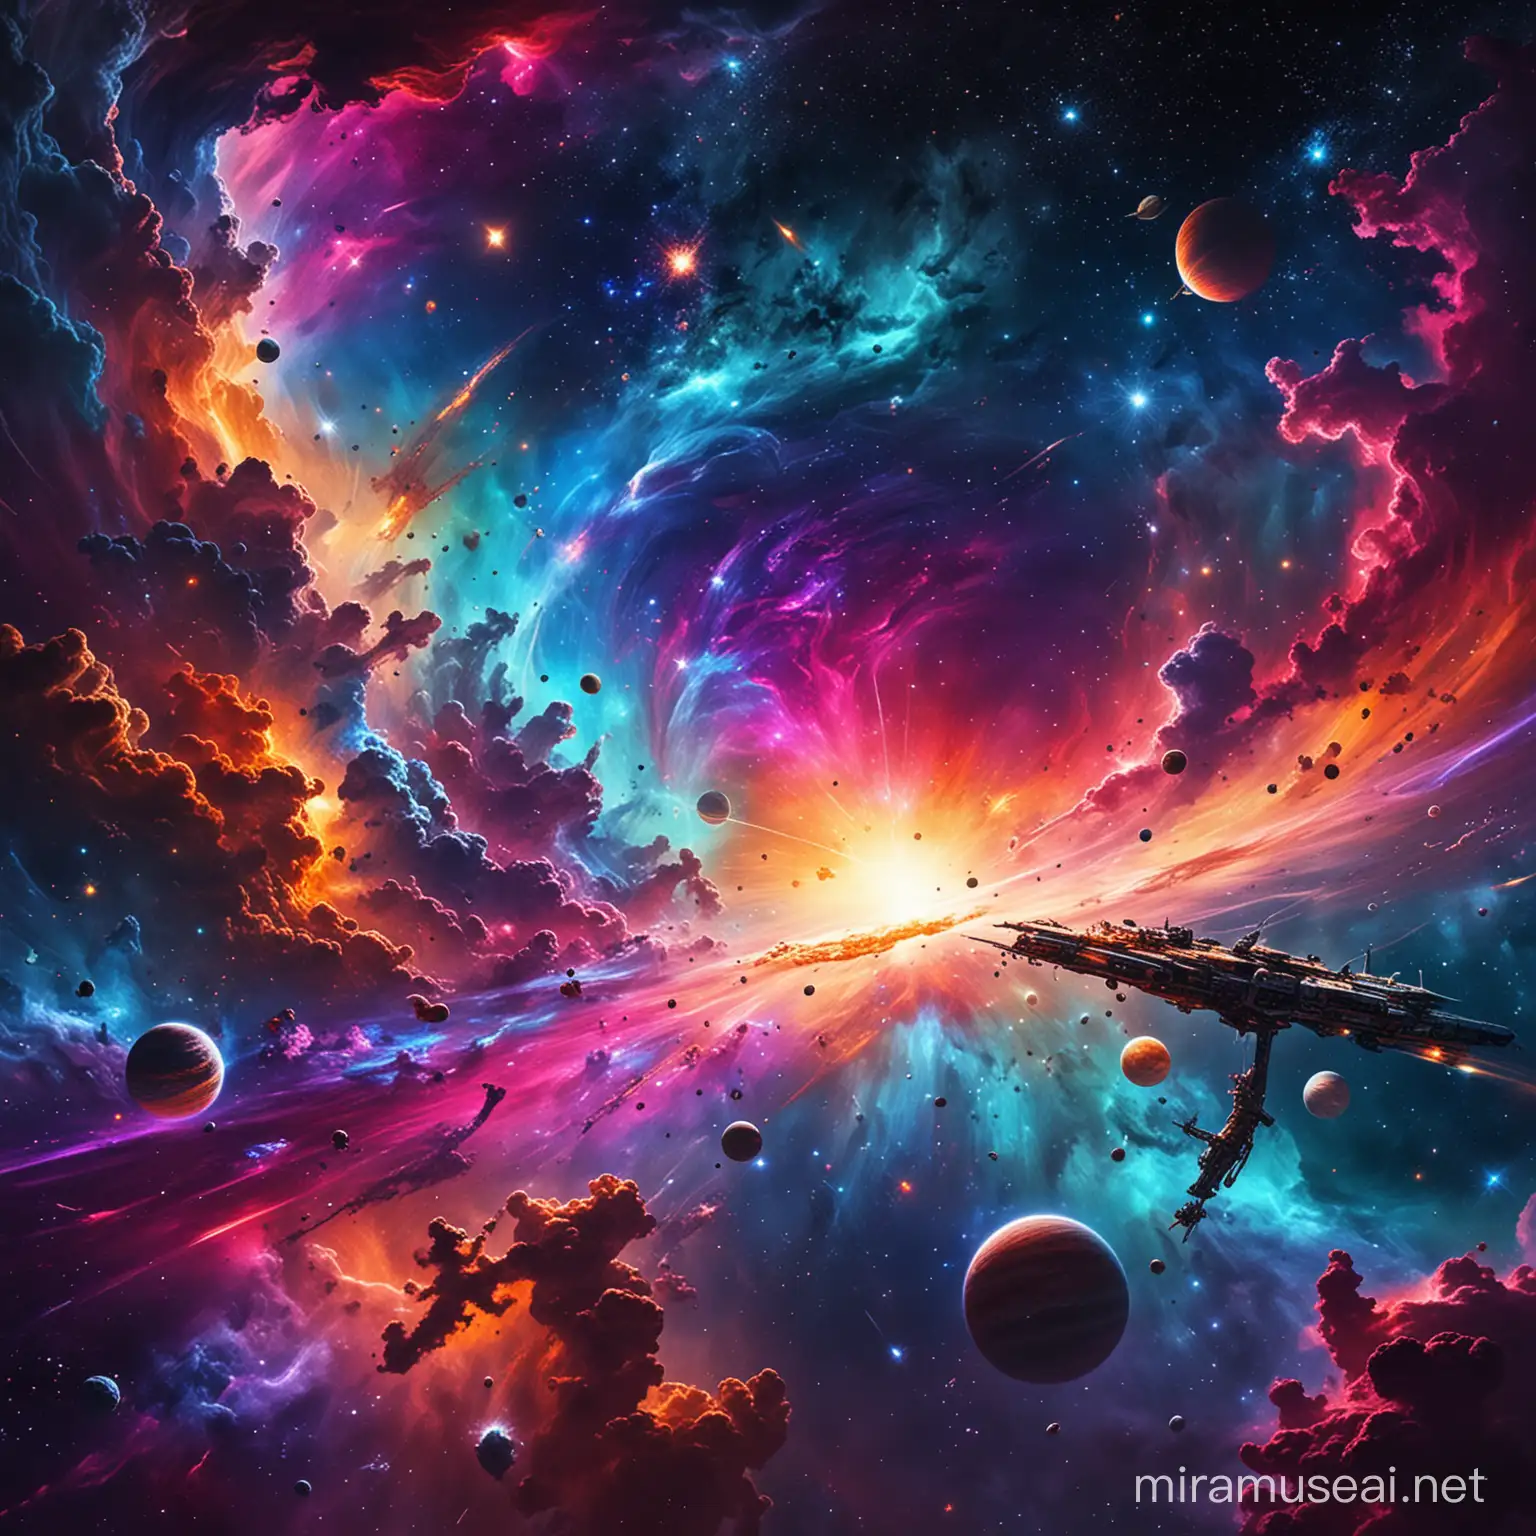 Vibrant Cosmic Landscape with Nebulas and Stars